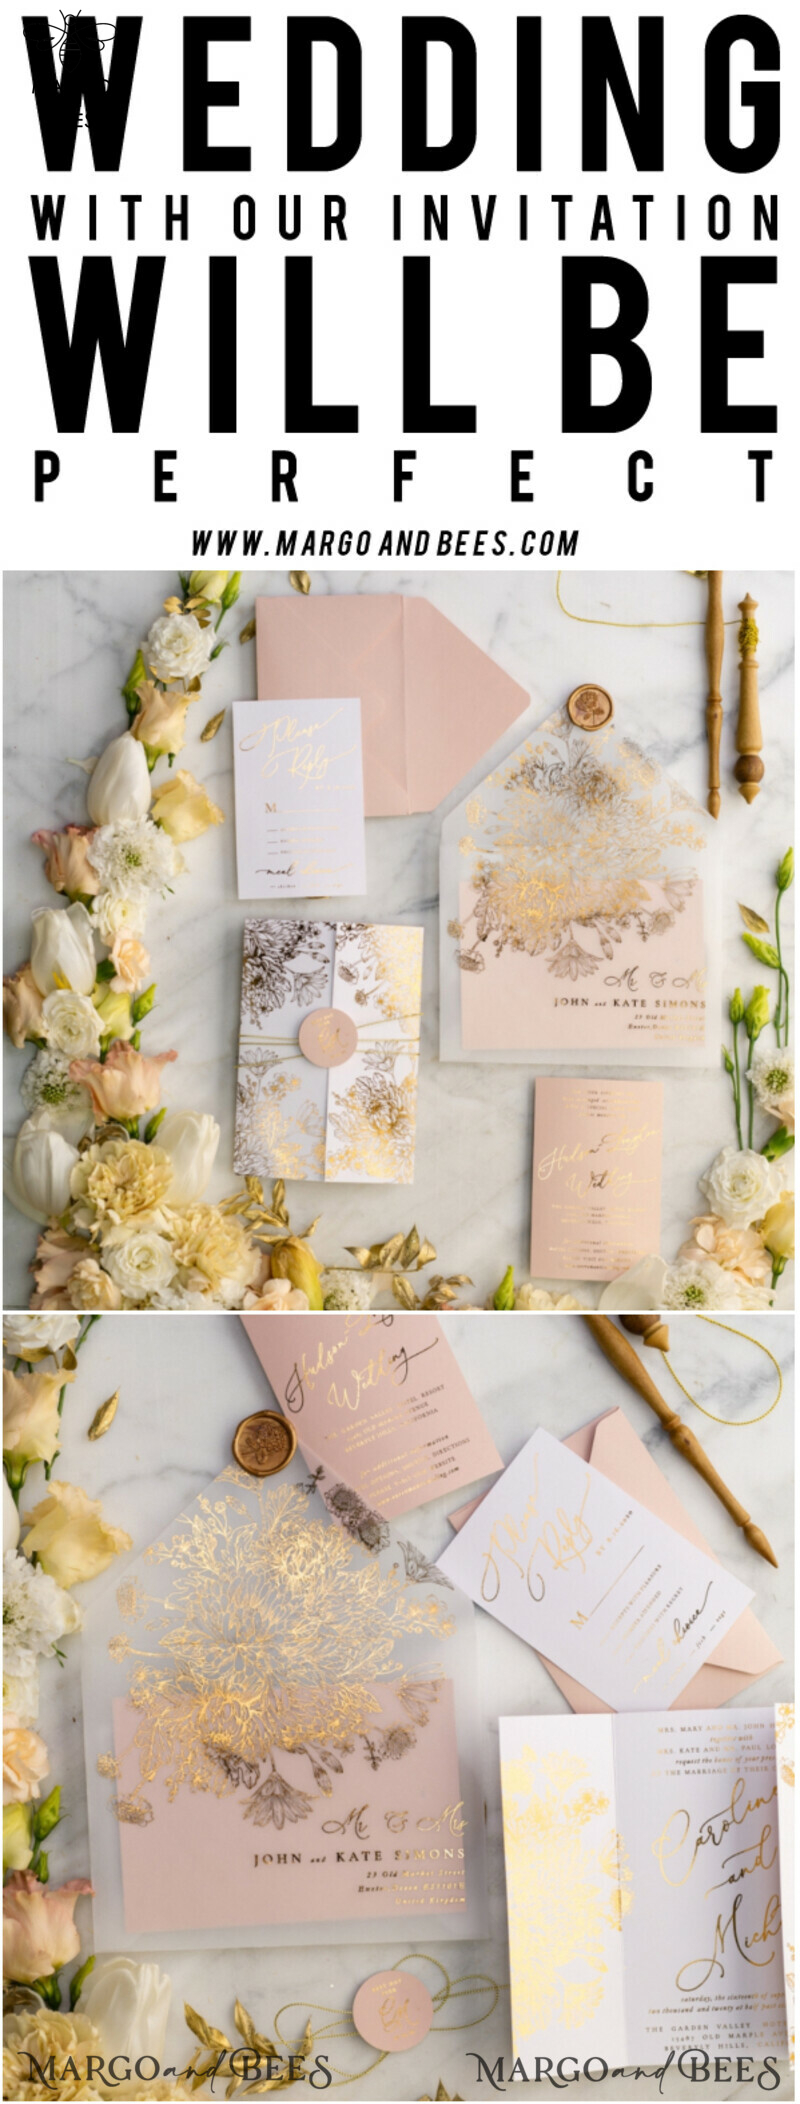 Luxury Arabic Golden Wedding Invitations, Glamour Gold Foil Wedding Invites, Romantic Blush Pink Wedding Cards, Bespoke Indian Wedding Stationery-37